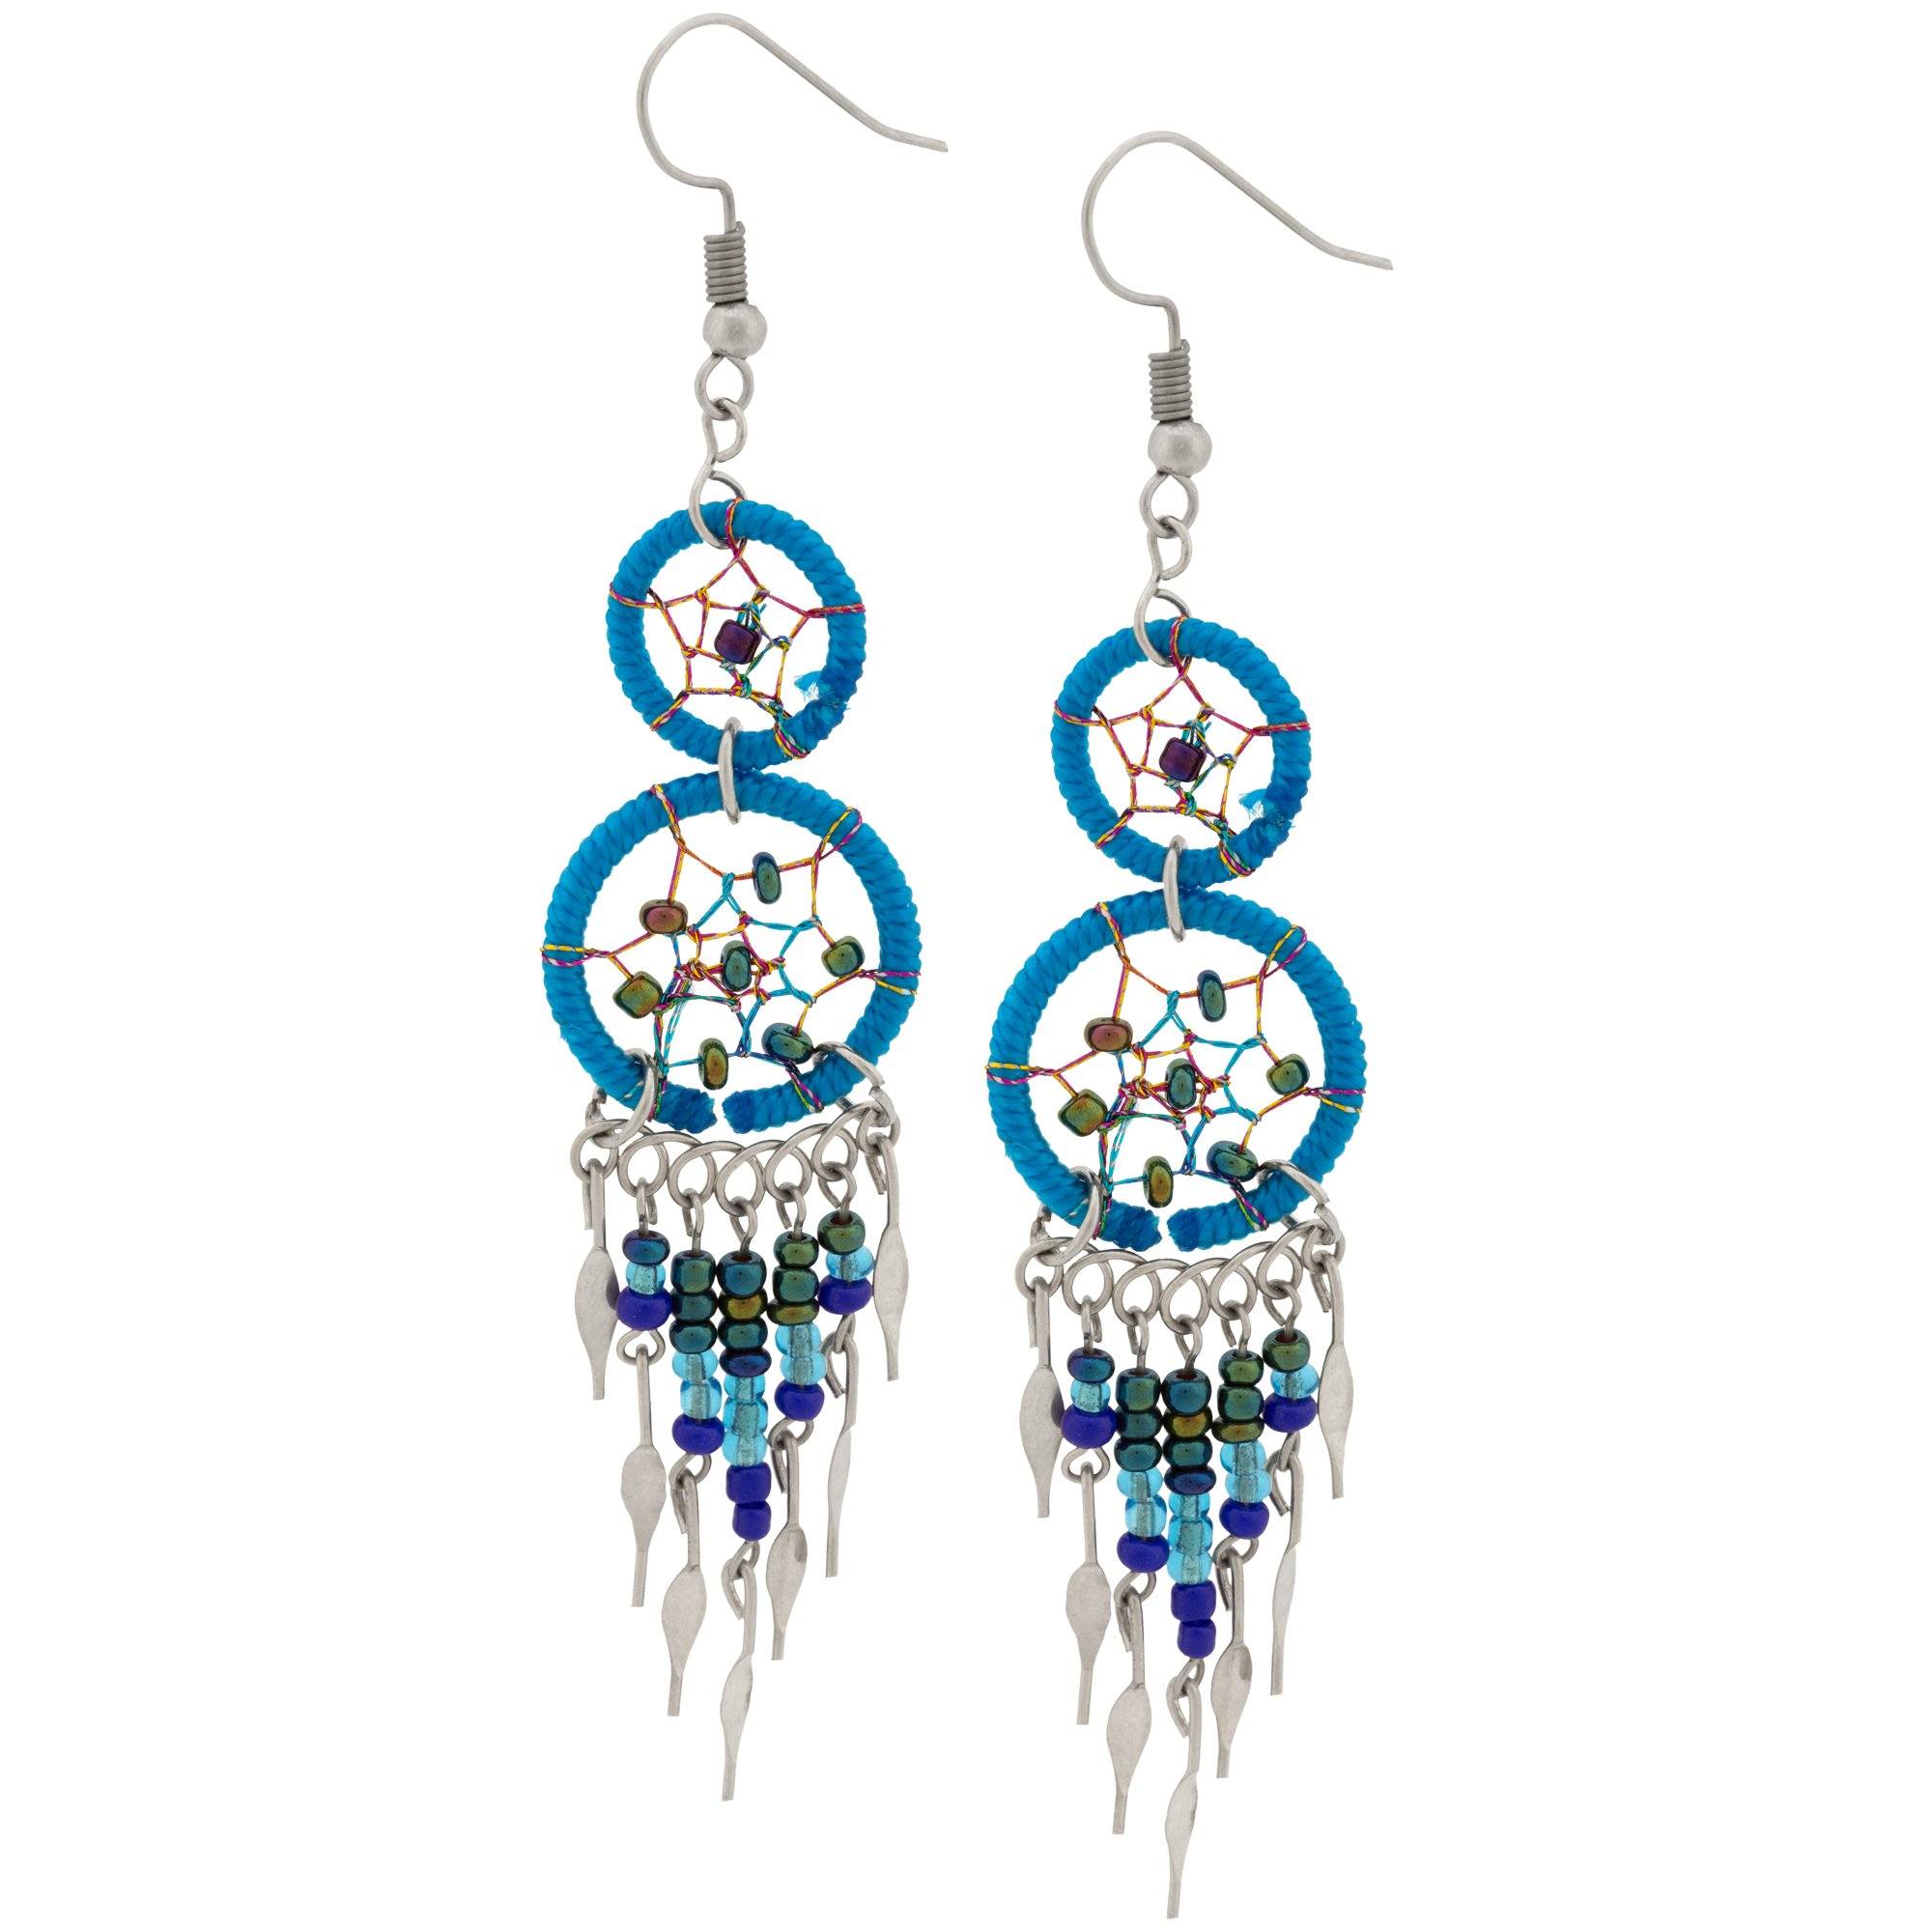 Double Dreamcatcher Dazzling Earrings - Turquoise